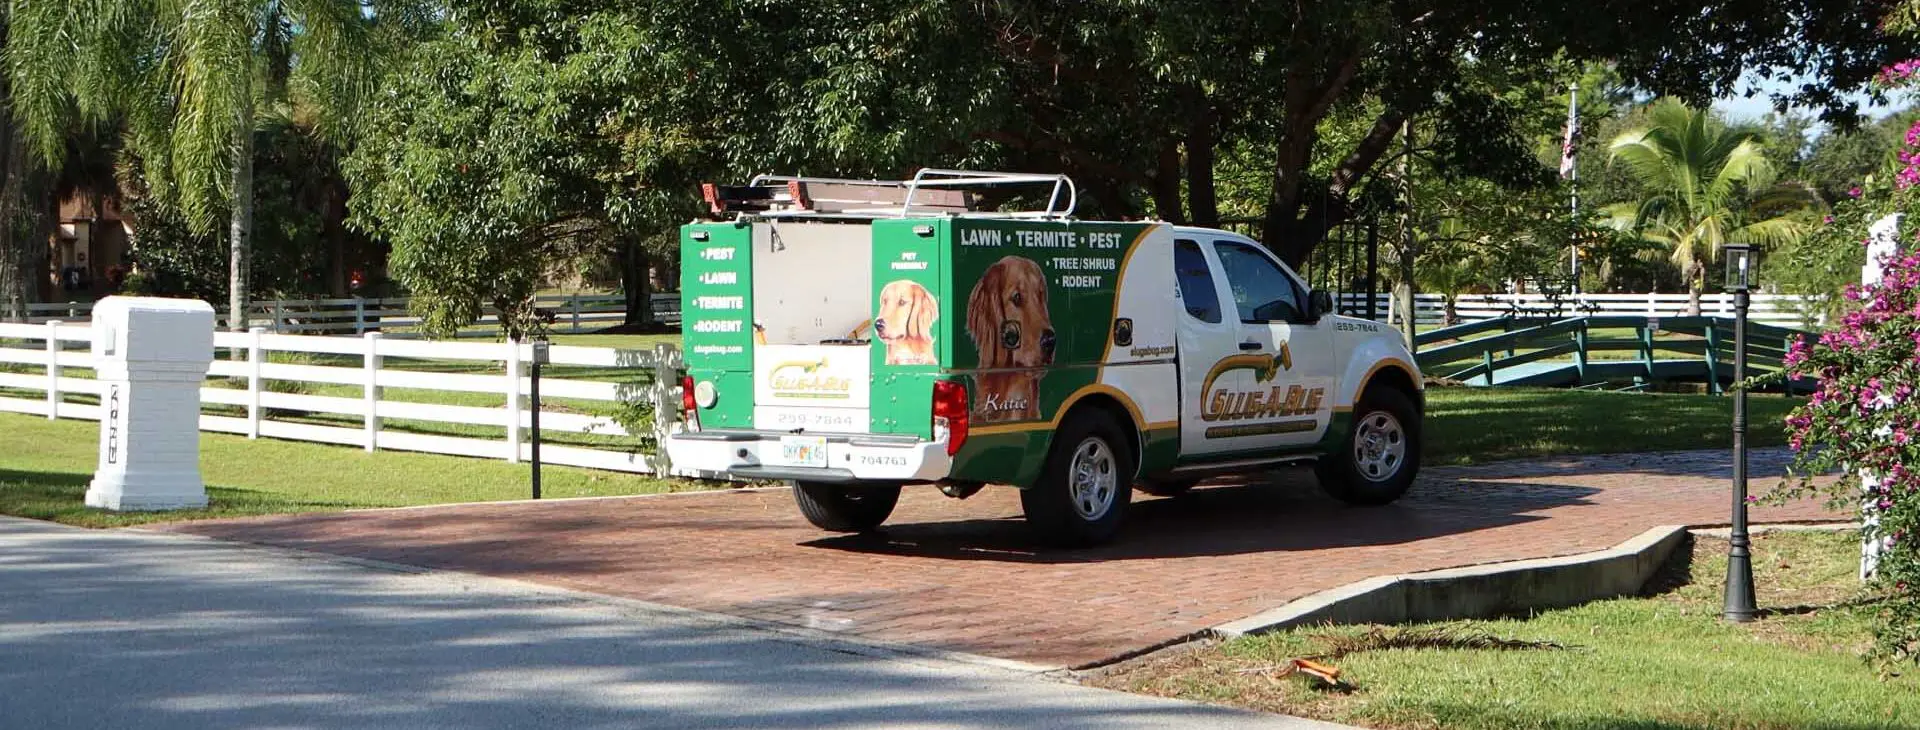 Slug-A-Bug Pest Control truck arriving at a residential home in Melbourne Florida